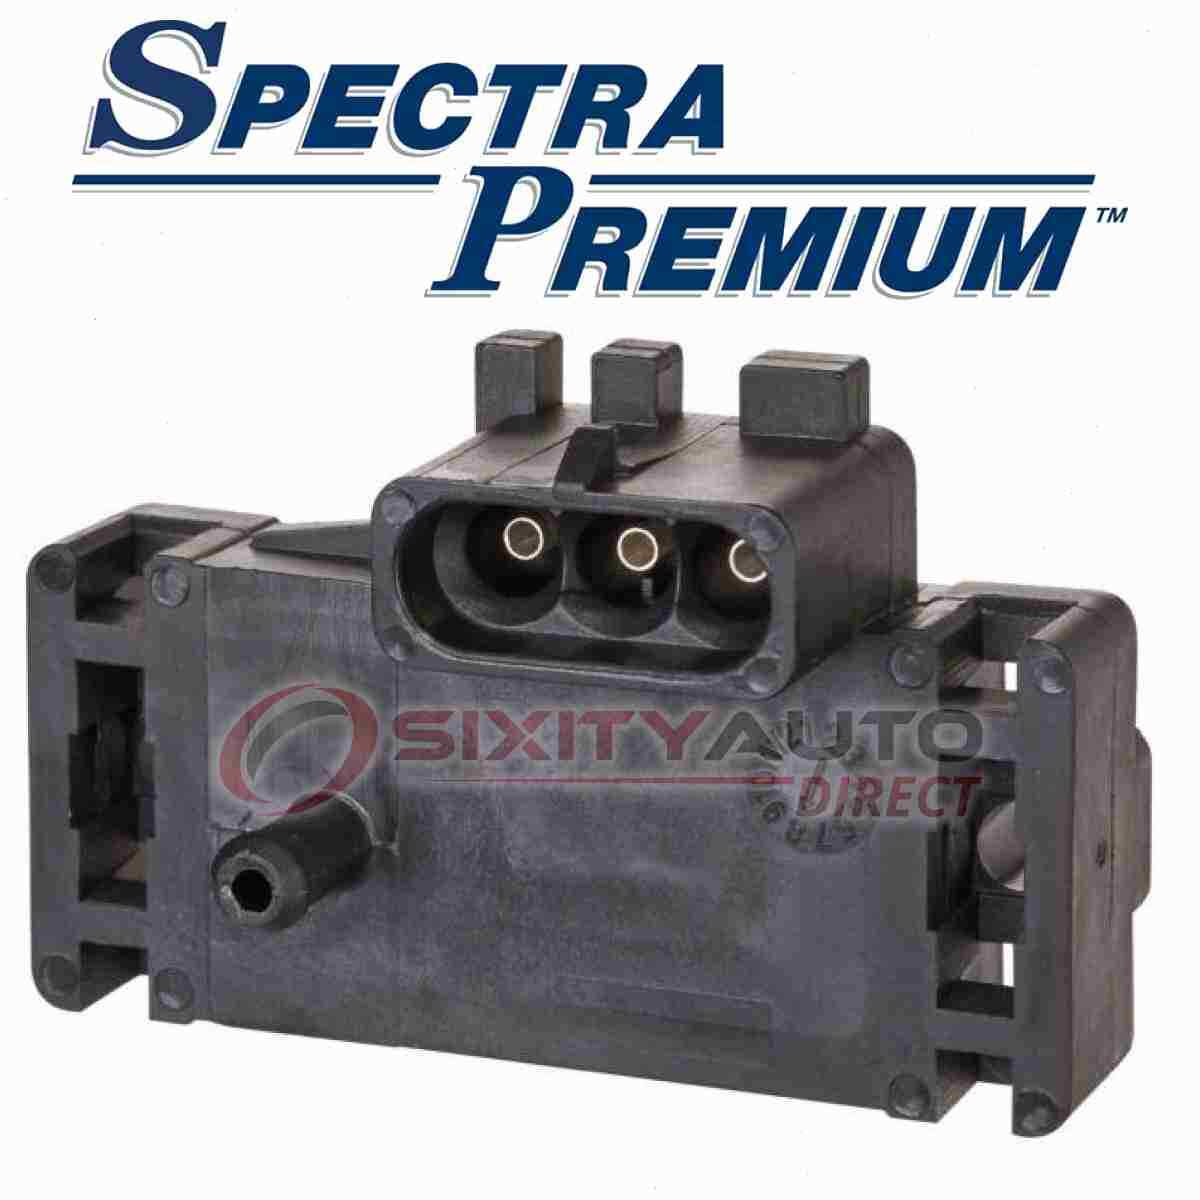 Spectra Premium Manifold Absolute Pressure Sensor for 1987-1989 Isuzu I-Mark bq